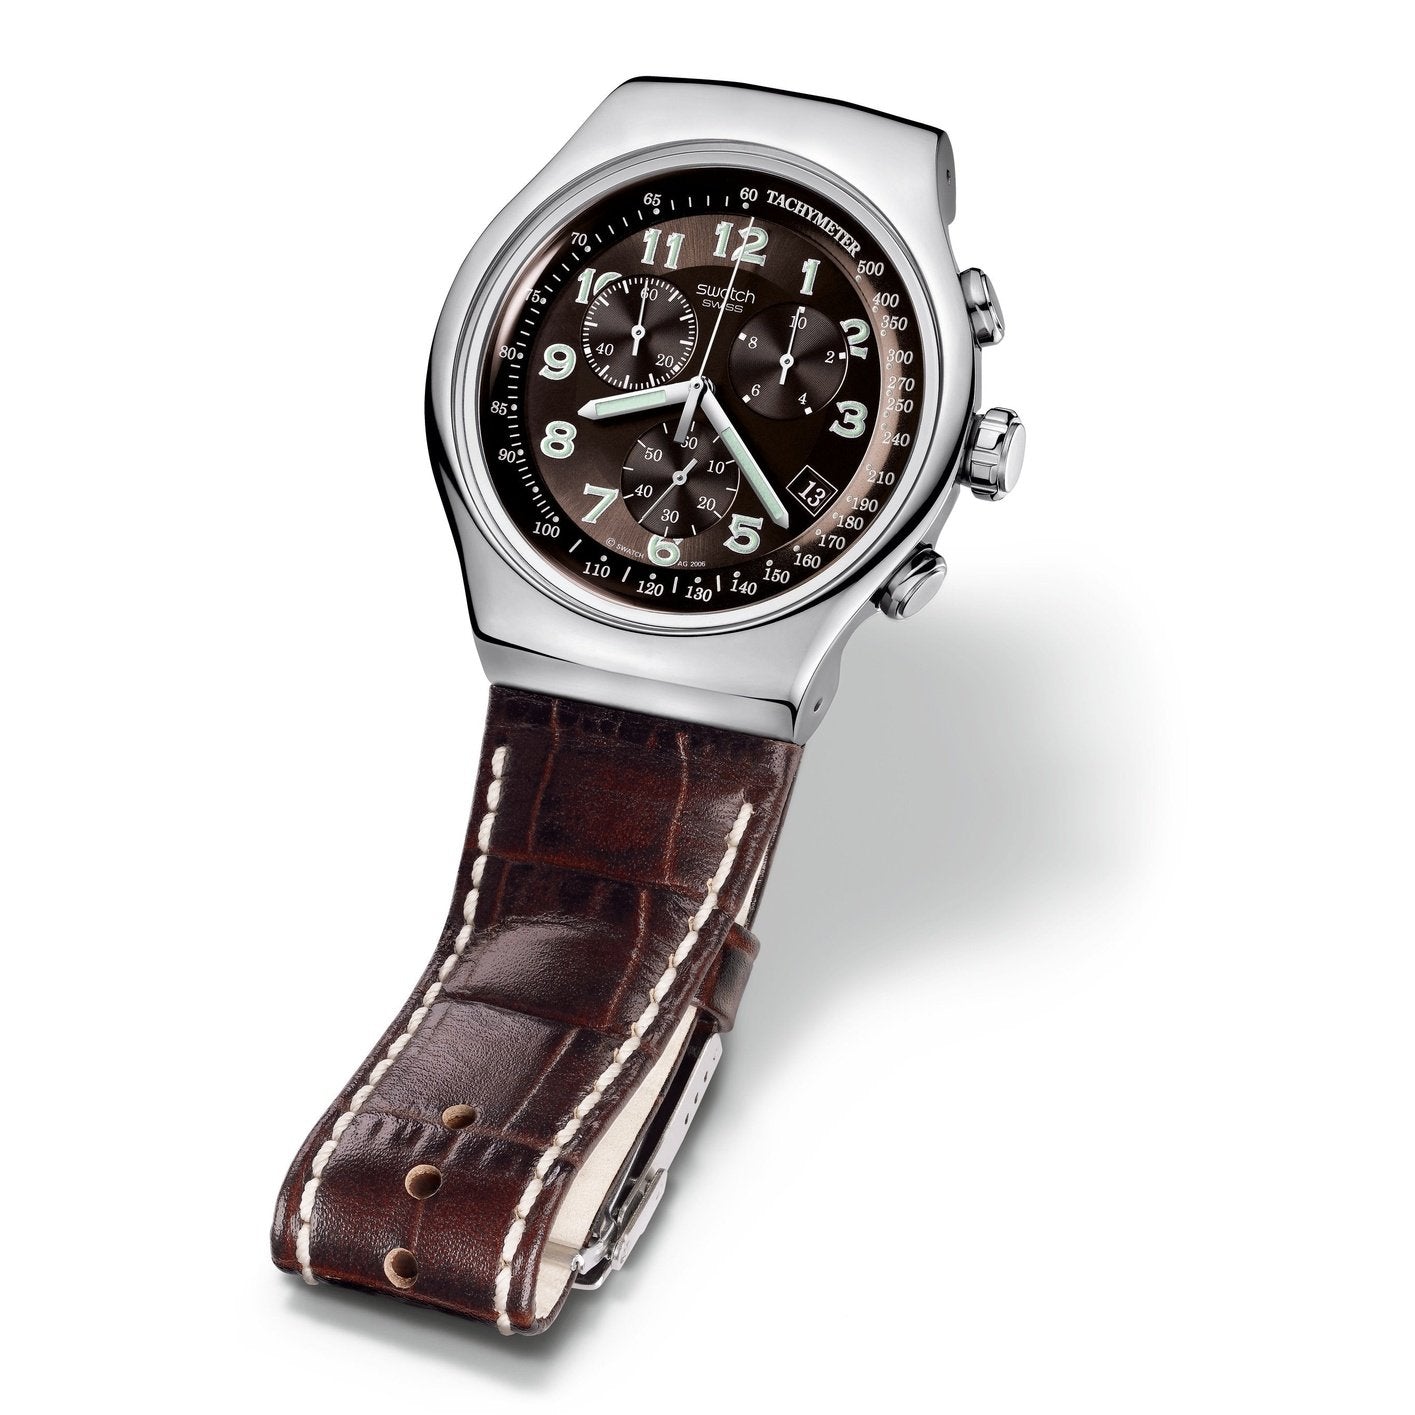 Swatch Irony V8 Chronograph 47 mm Sports Watch Glass | eBay